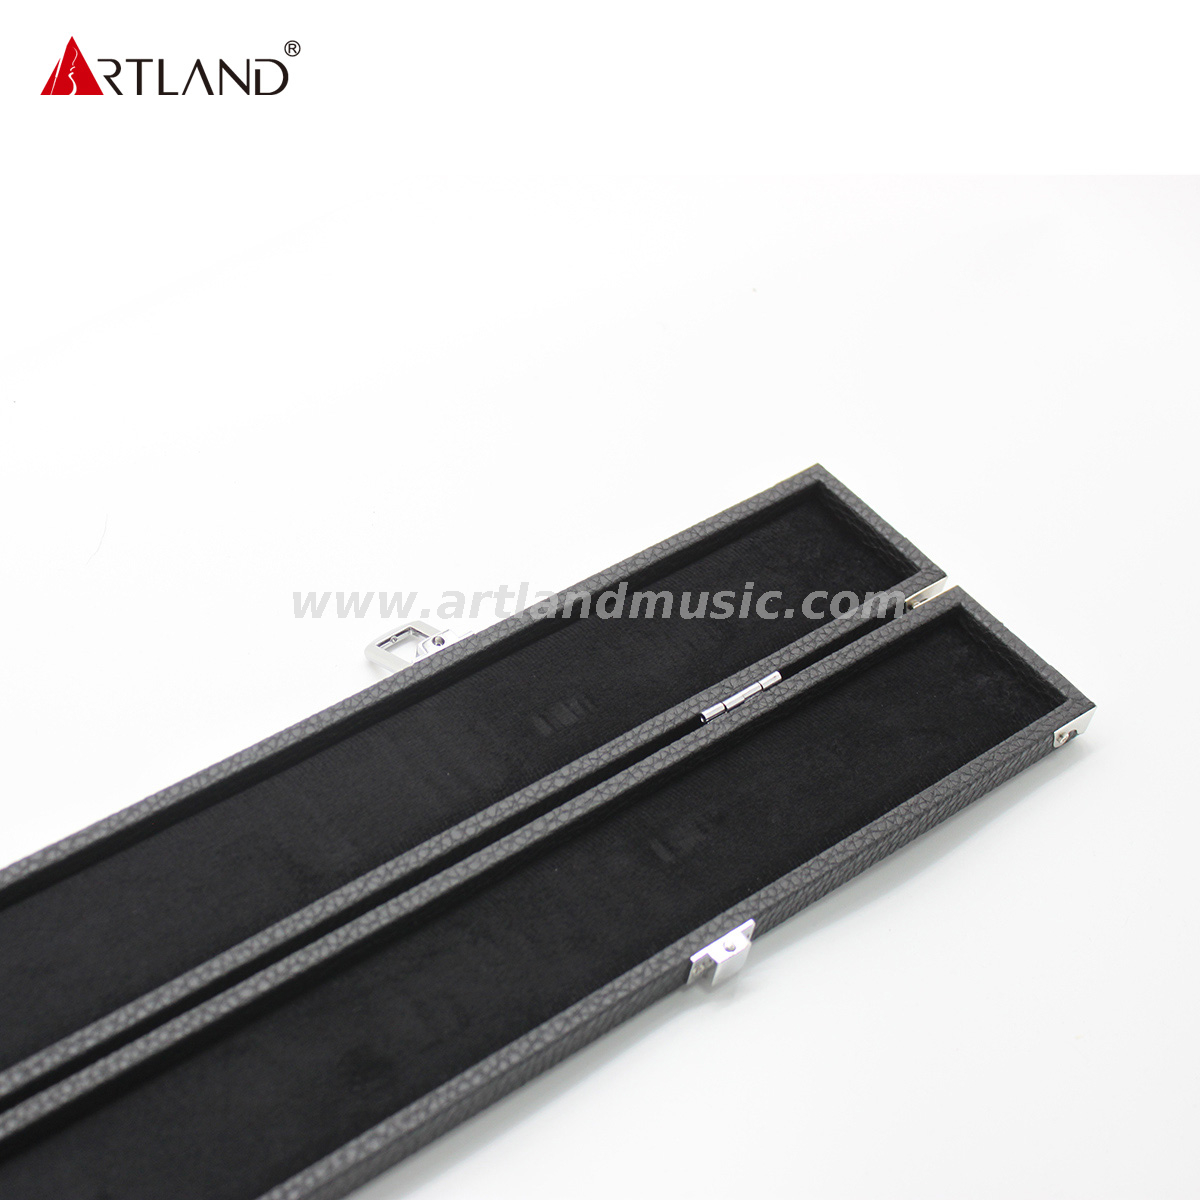 Artland single bow case for violin viola cello bow with vinyl coved exterior (BCW801)